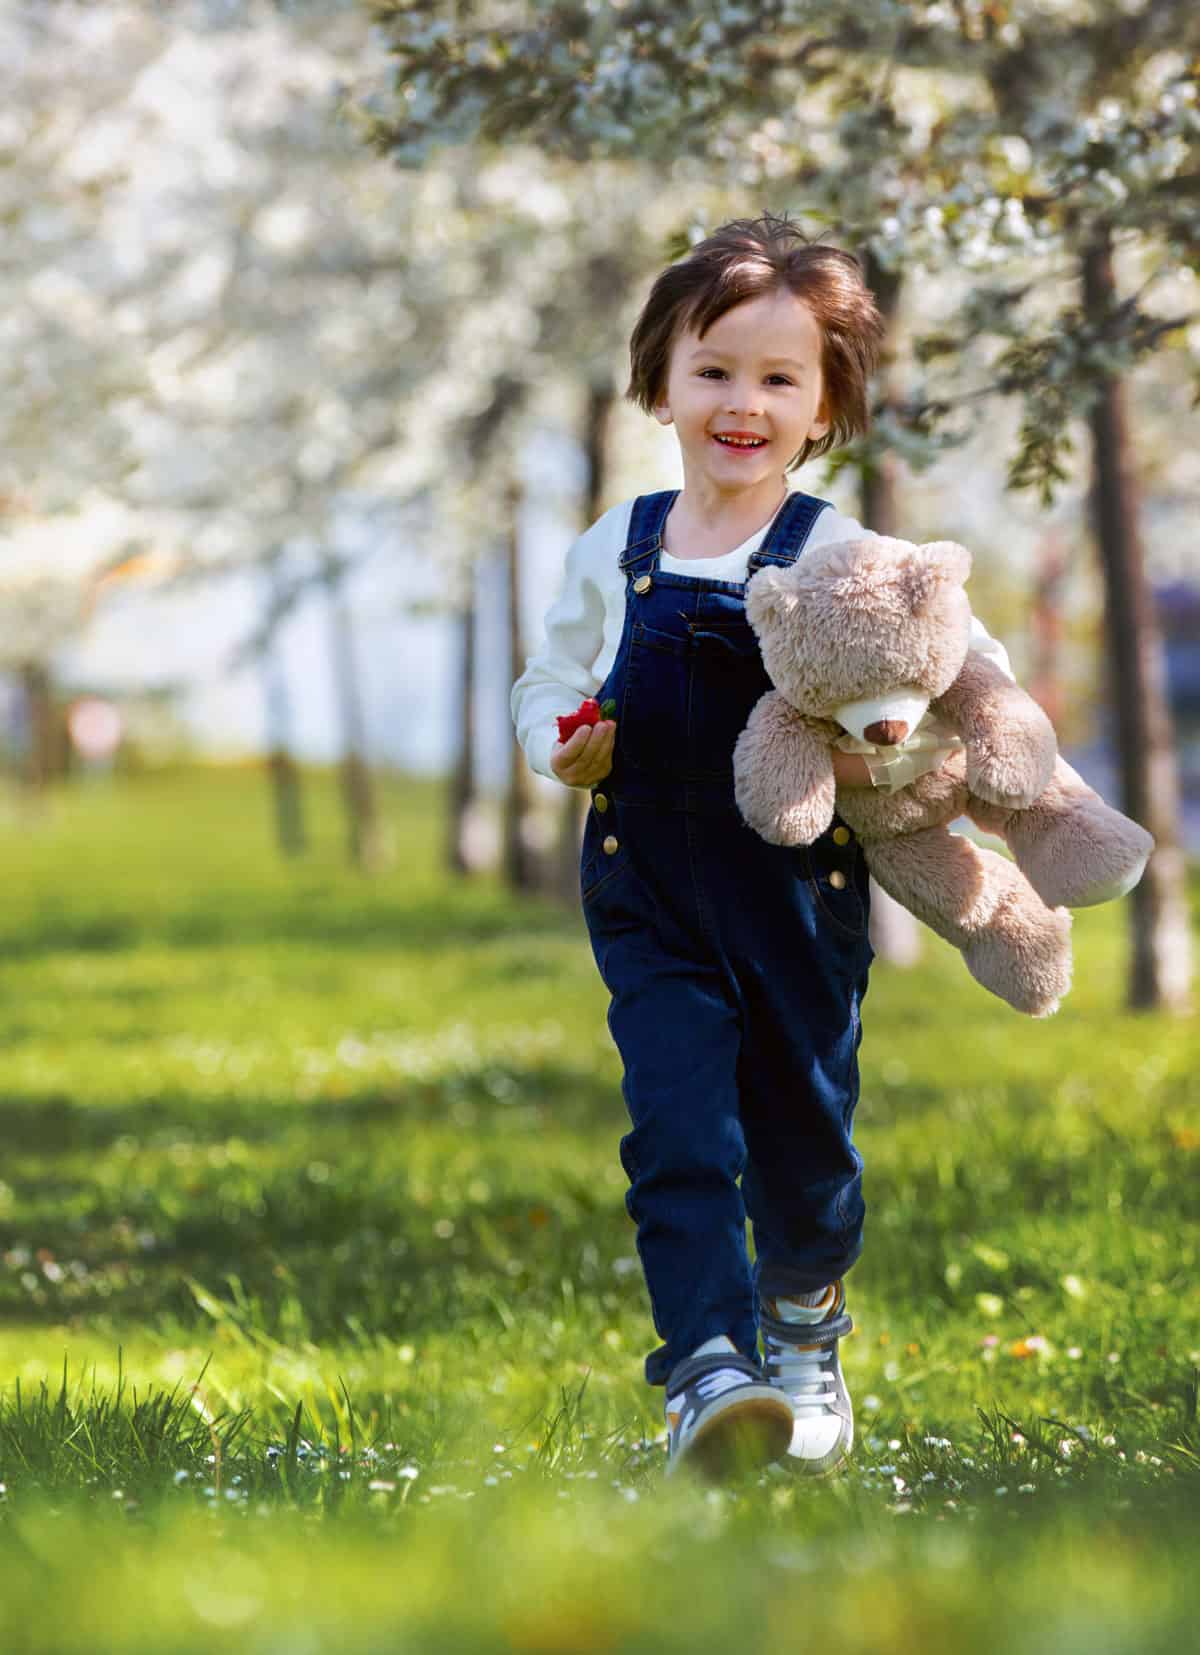 A young boy running through a field with a teddy bear.